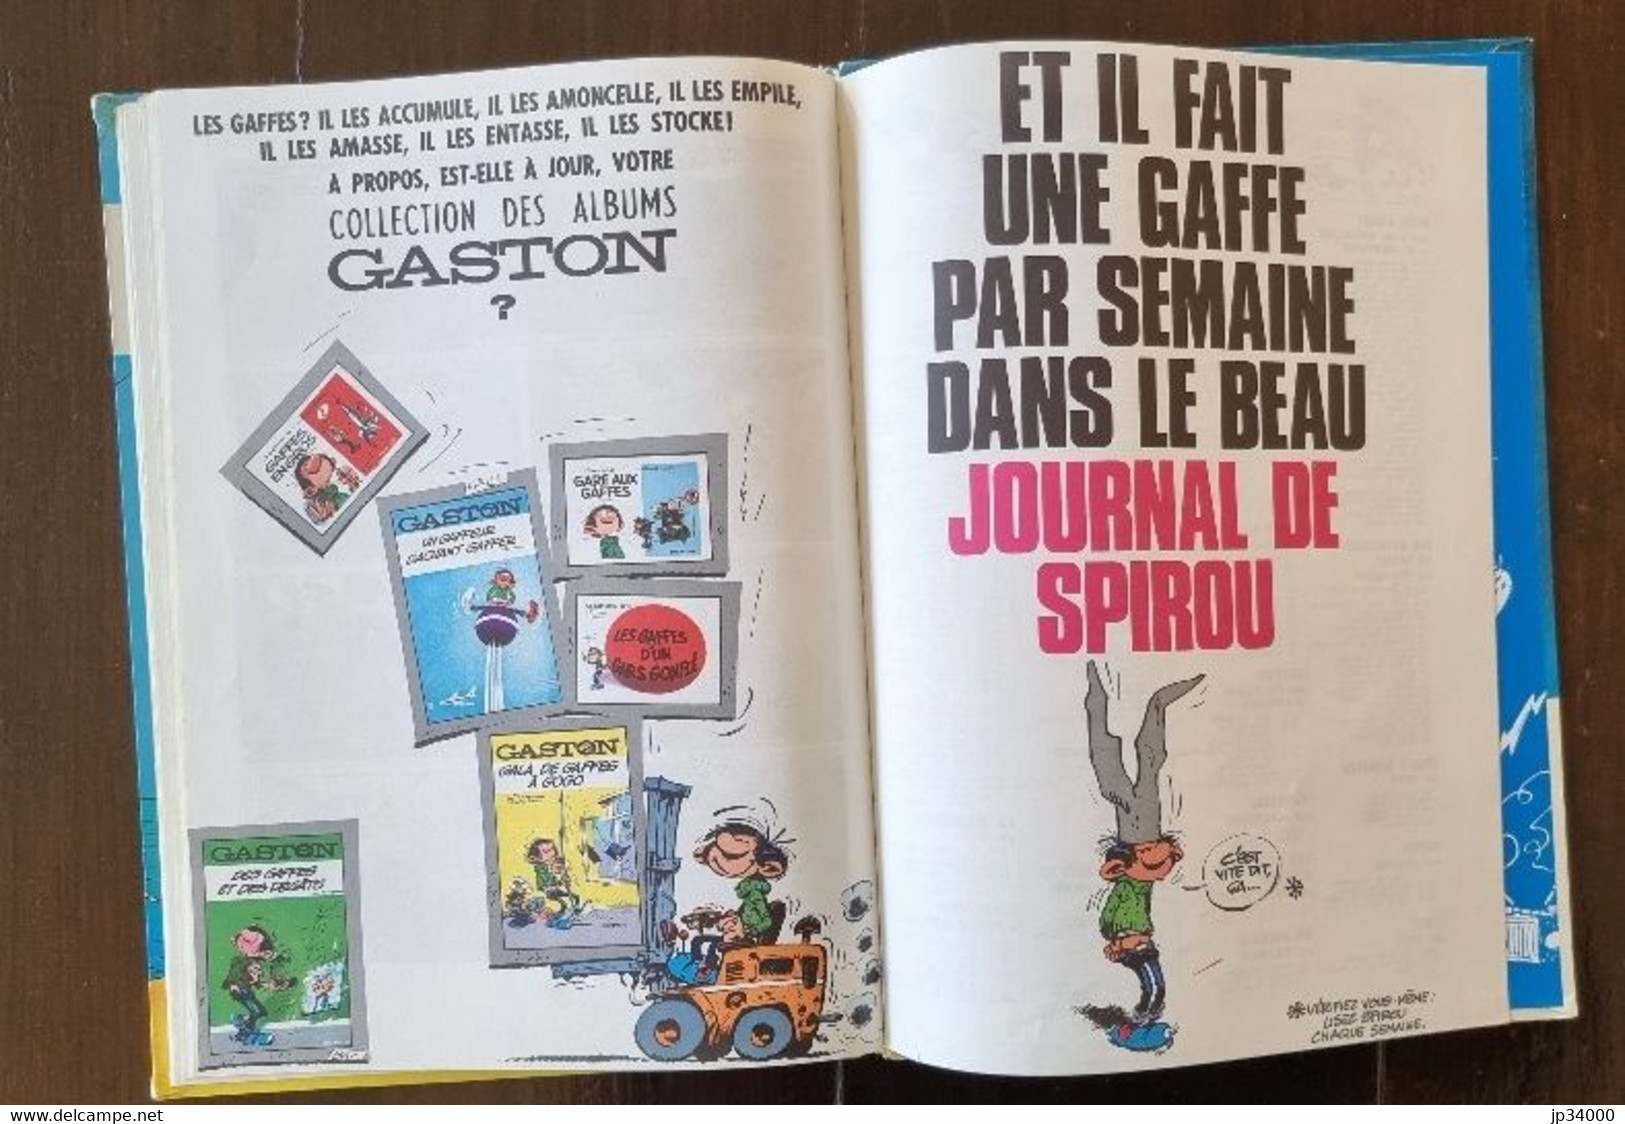 Franquin, GASTON LAGAFFE 8 lagaffe nous gate. Edition Originale 1970 Dos rond